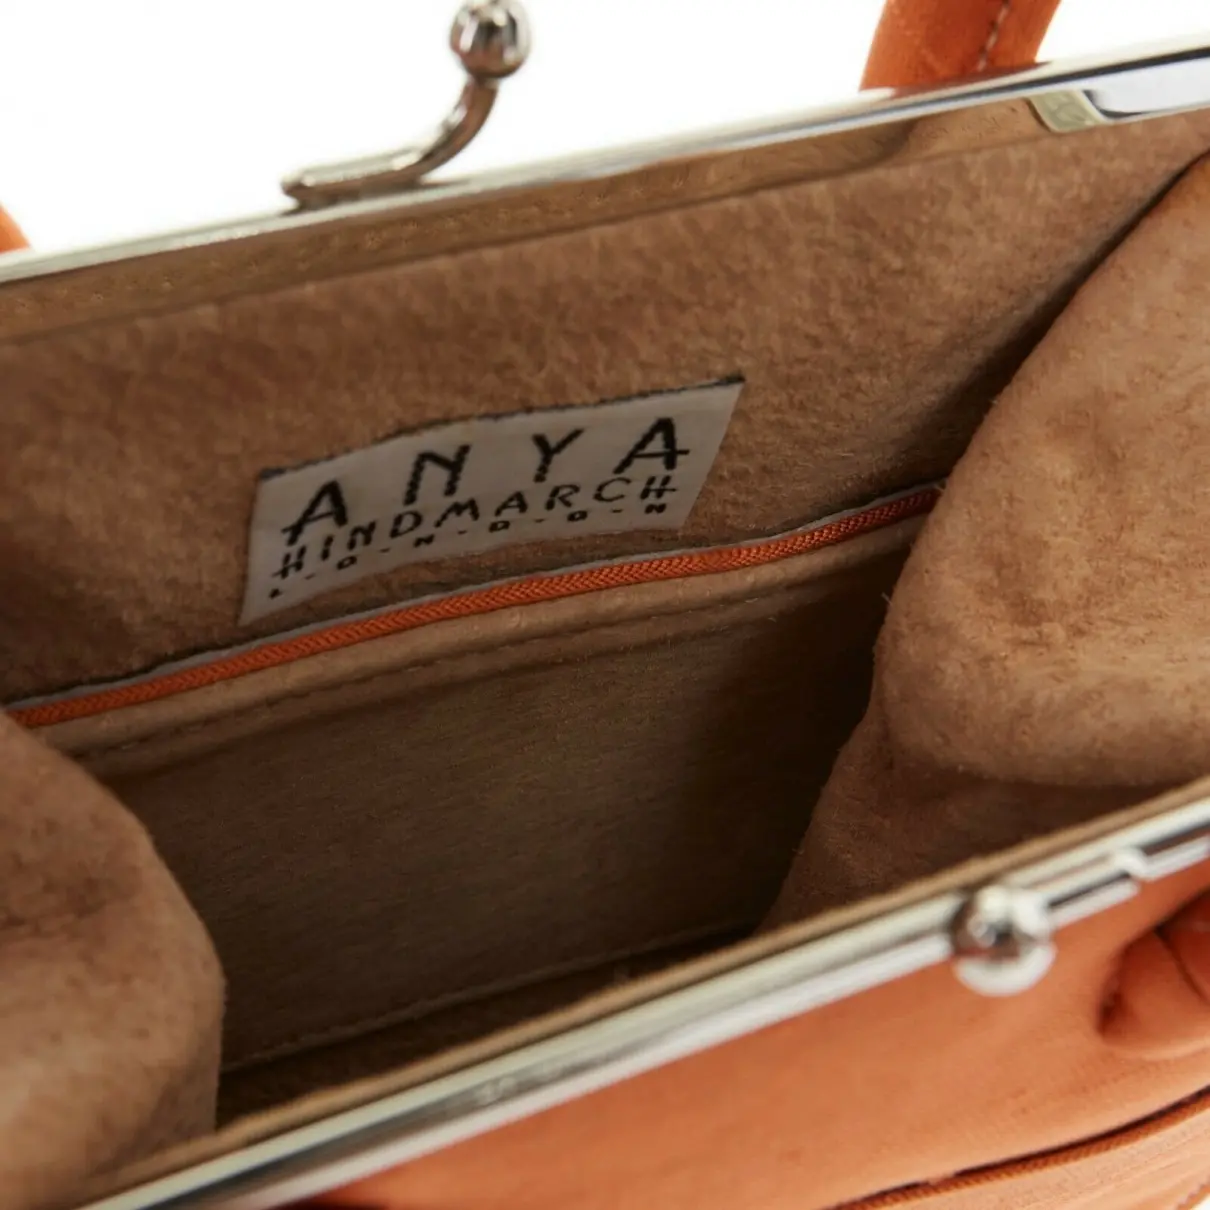 Silk handbag Anya Hindmarch - Vintage